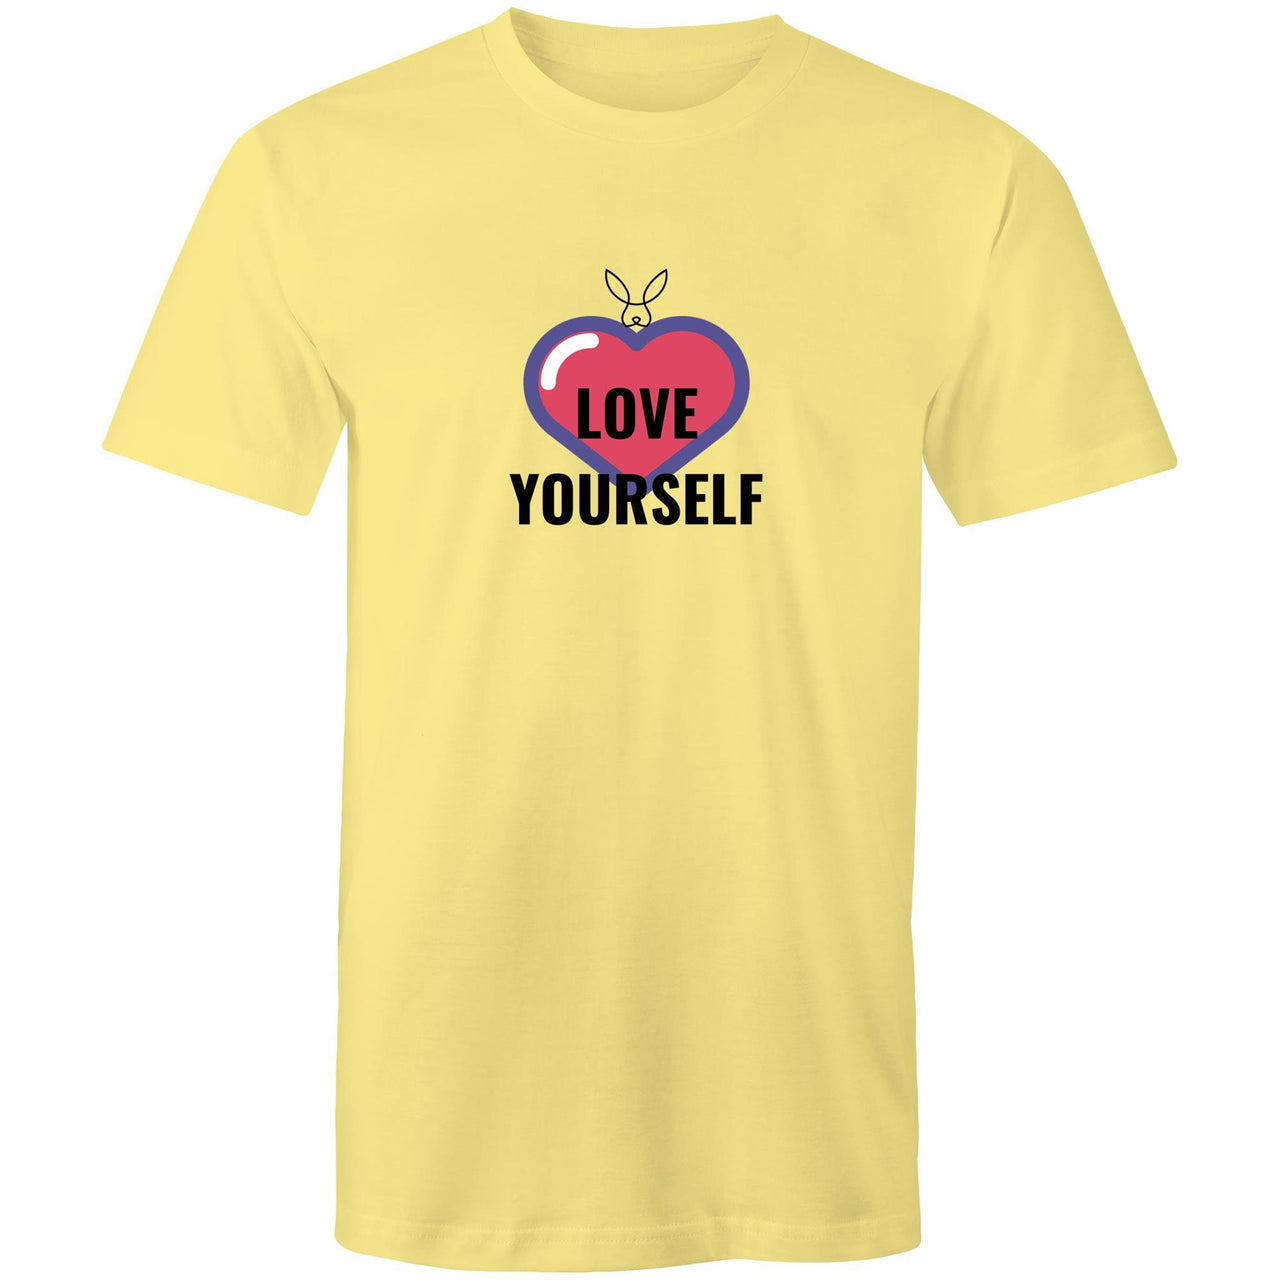 Love Yourself Crew T-Shirt by CBF Clothing Lemon